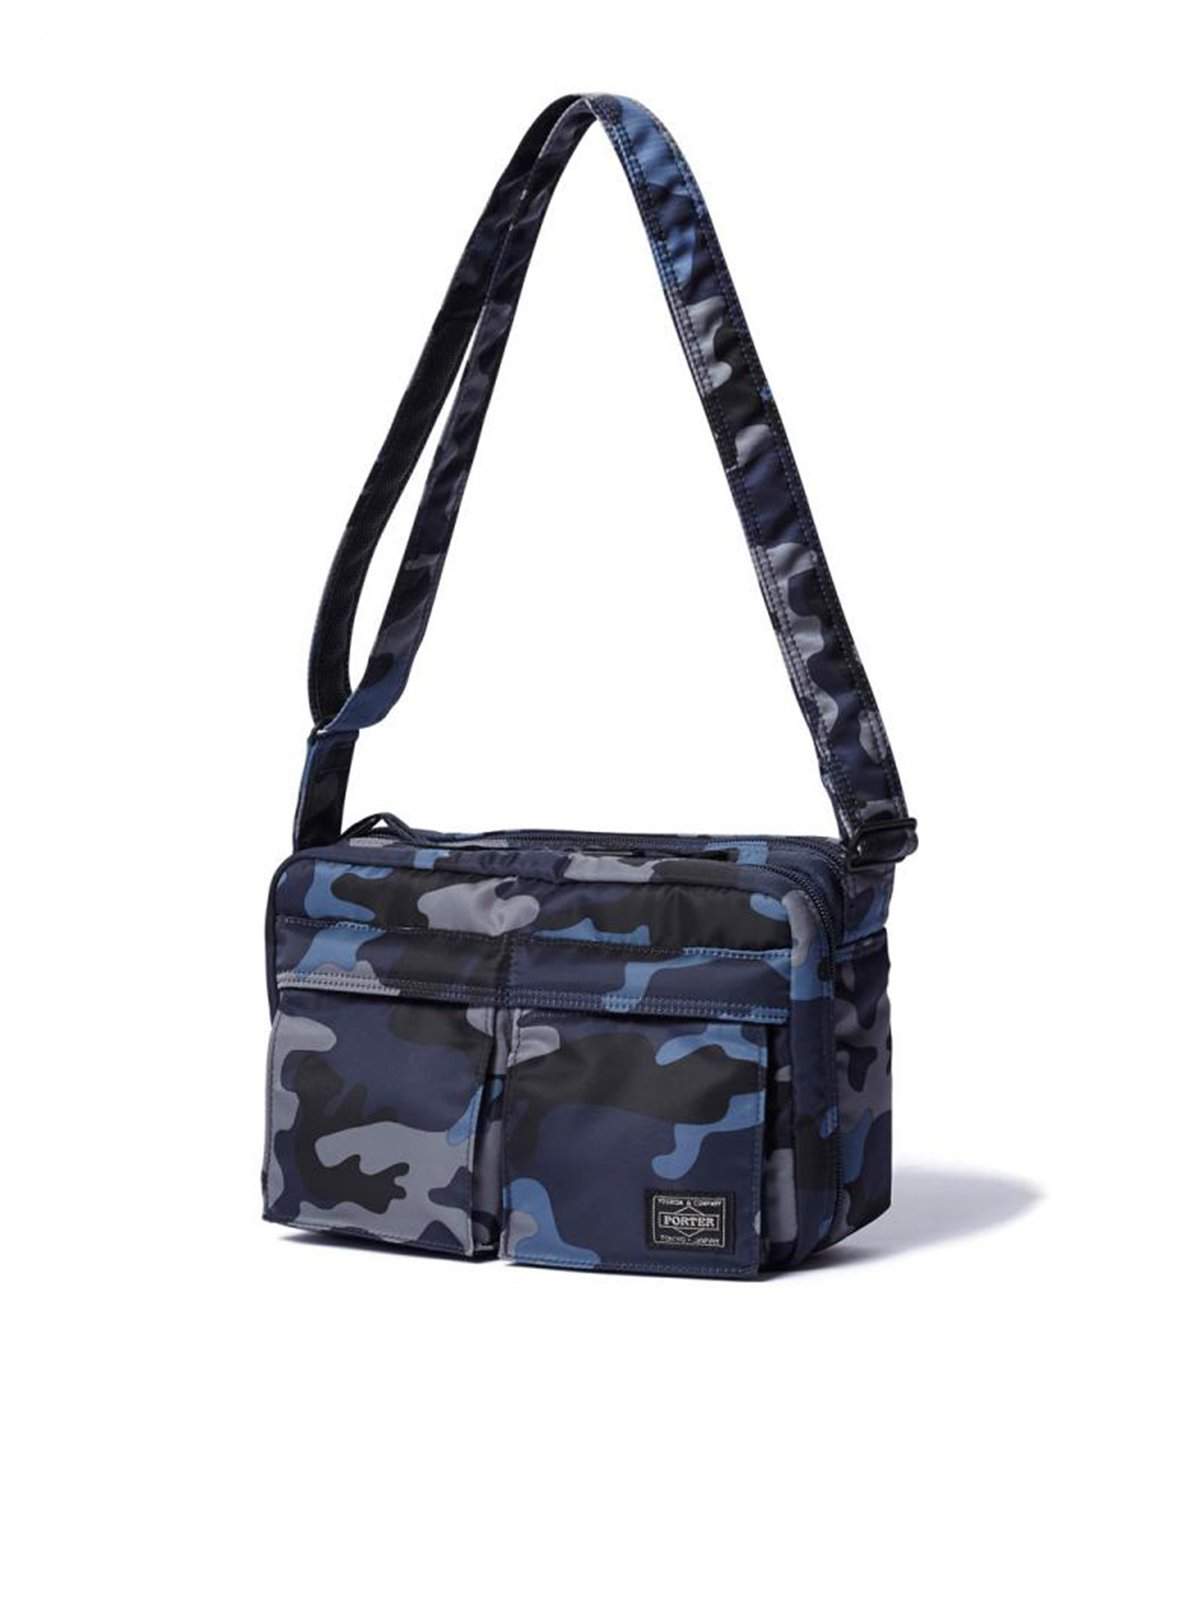 Porter-Yoshida & Co. Shoulder Bag S Jungle Dark Navy - MORE by Morello Indonesia